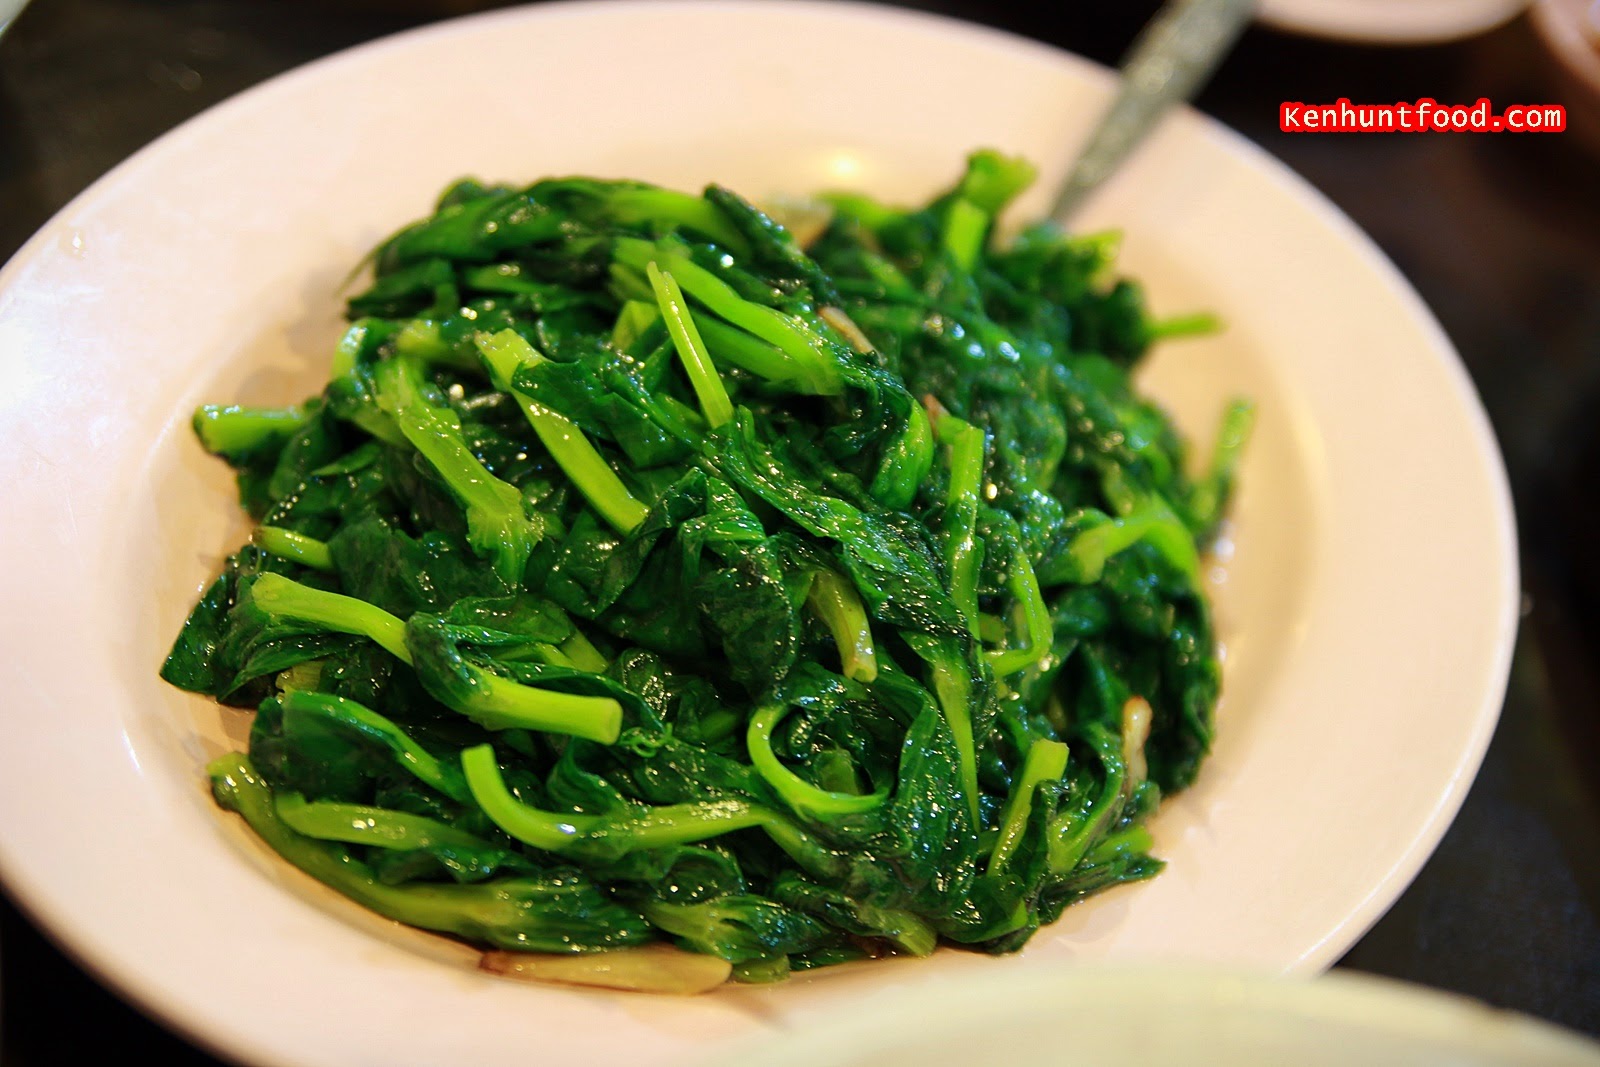 Ken Hunts Food: Foong Yean Cantonese Restaurant (方源粤菜餐厅) @ Jalan Tengah ...